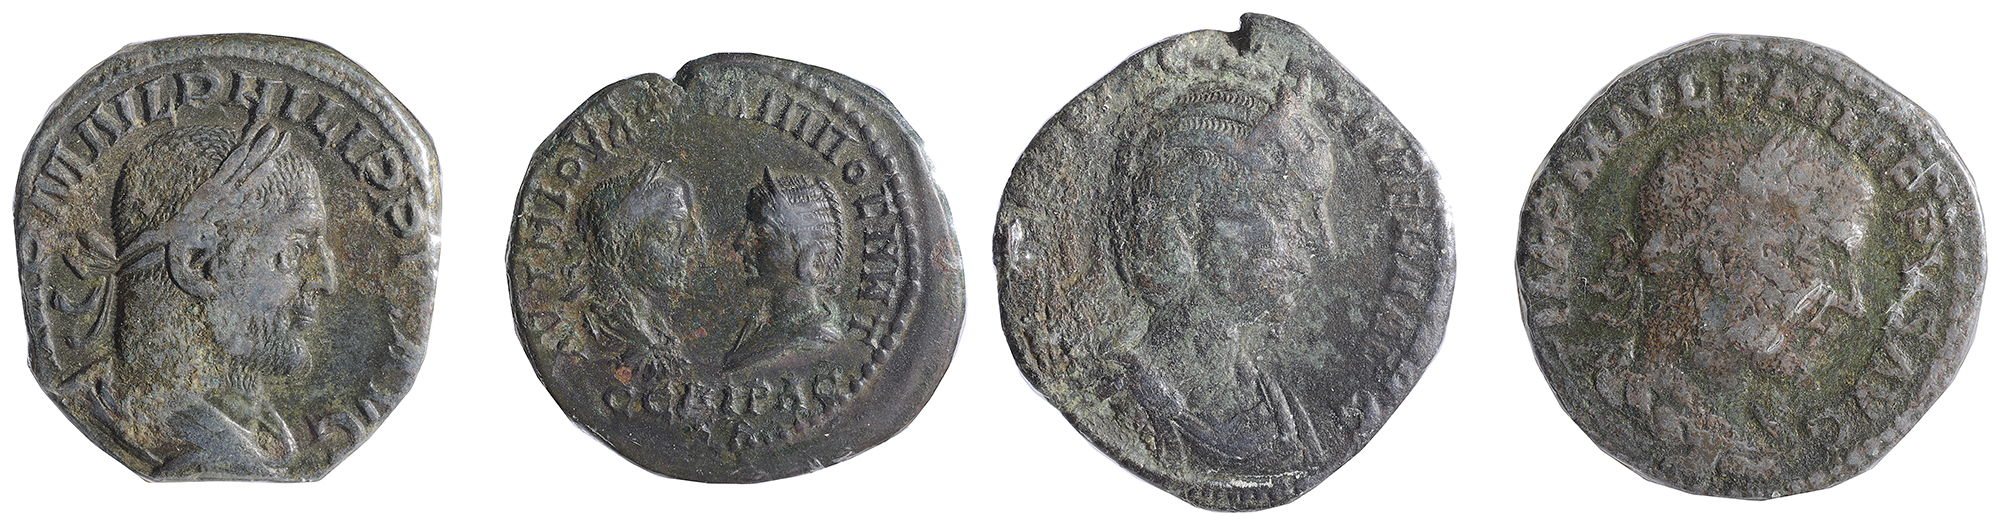 Philip I AE SestertiusRome, Struck 248 ADIMP M IVL PHILIPPVS AVG: Bust of Philip the Arab, laureate,